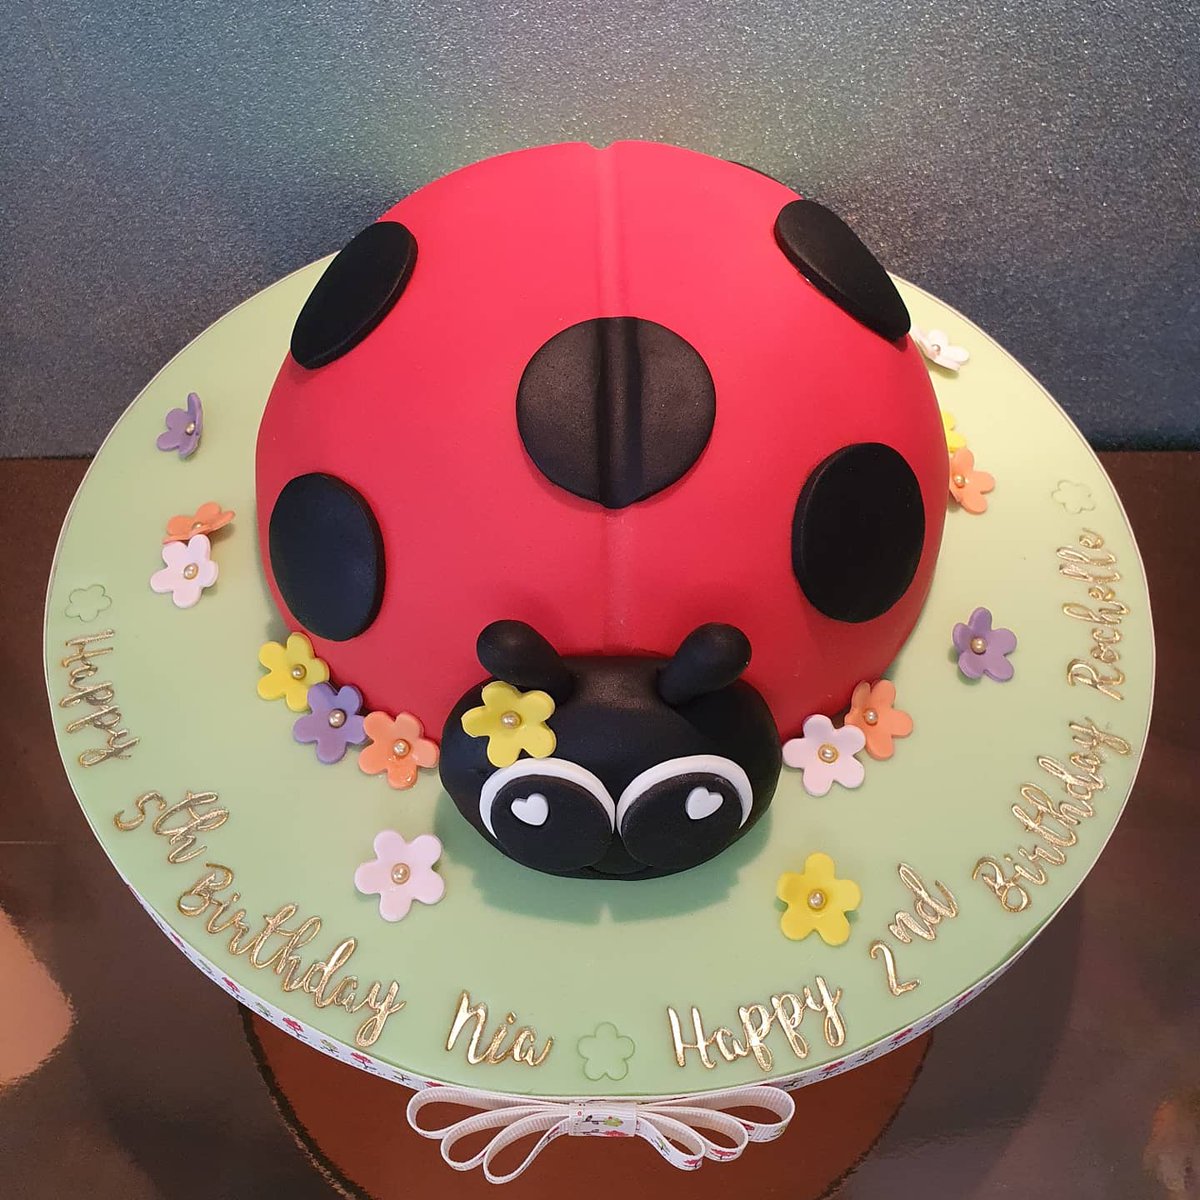 A little Love Ladybird cake ❤🐞🎂

#AuntieCakeBakes #ladybirdcake #lovebugcake #birthdaycake #noveltycake #essexbaker #eastlondonbaker